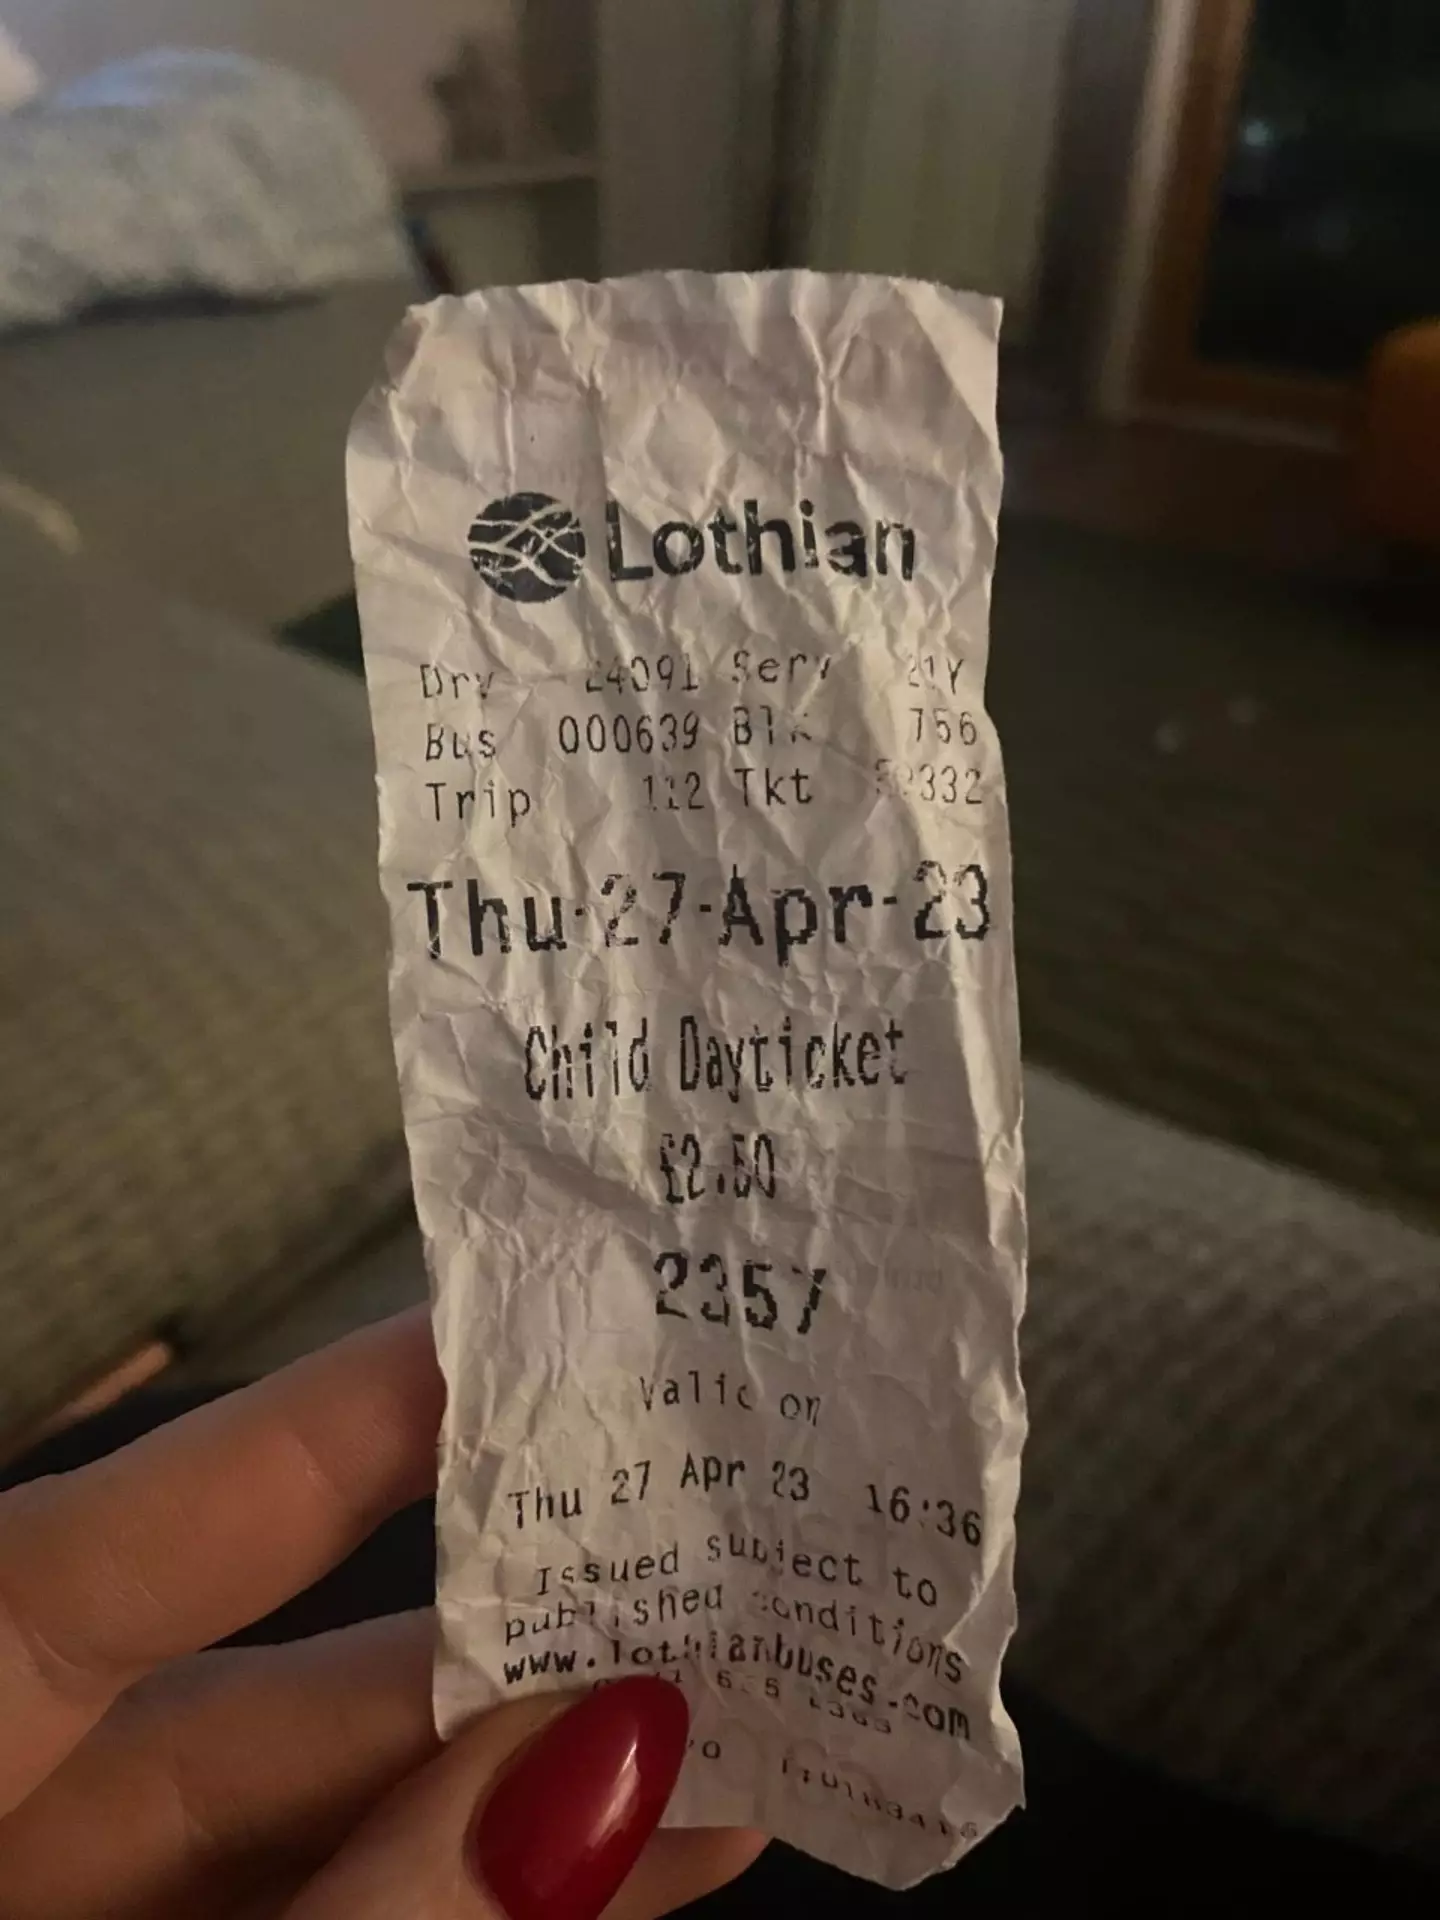 Said 'crumpled' ticket.